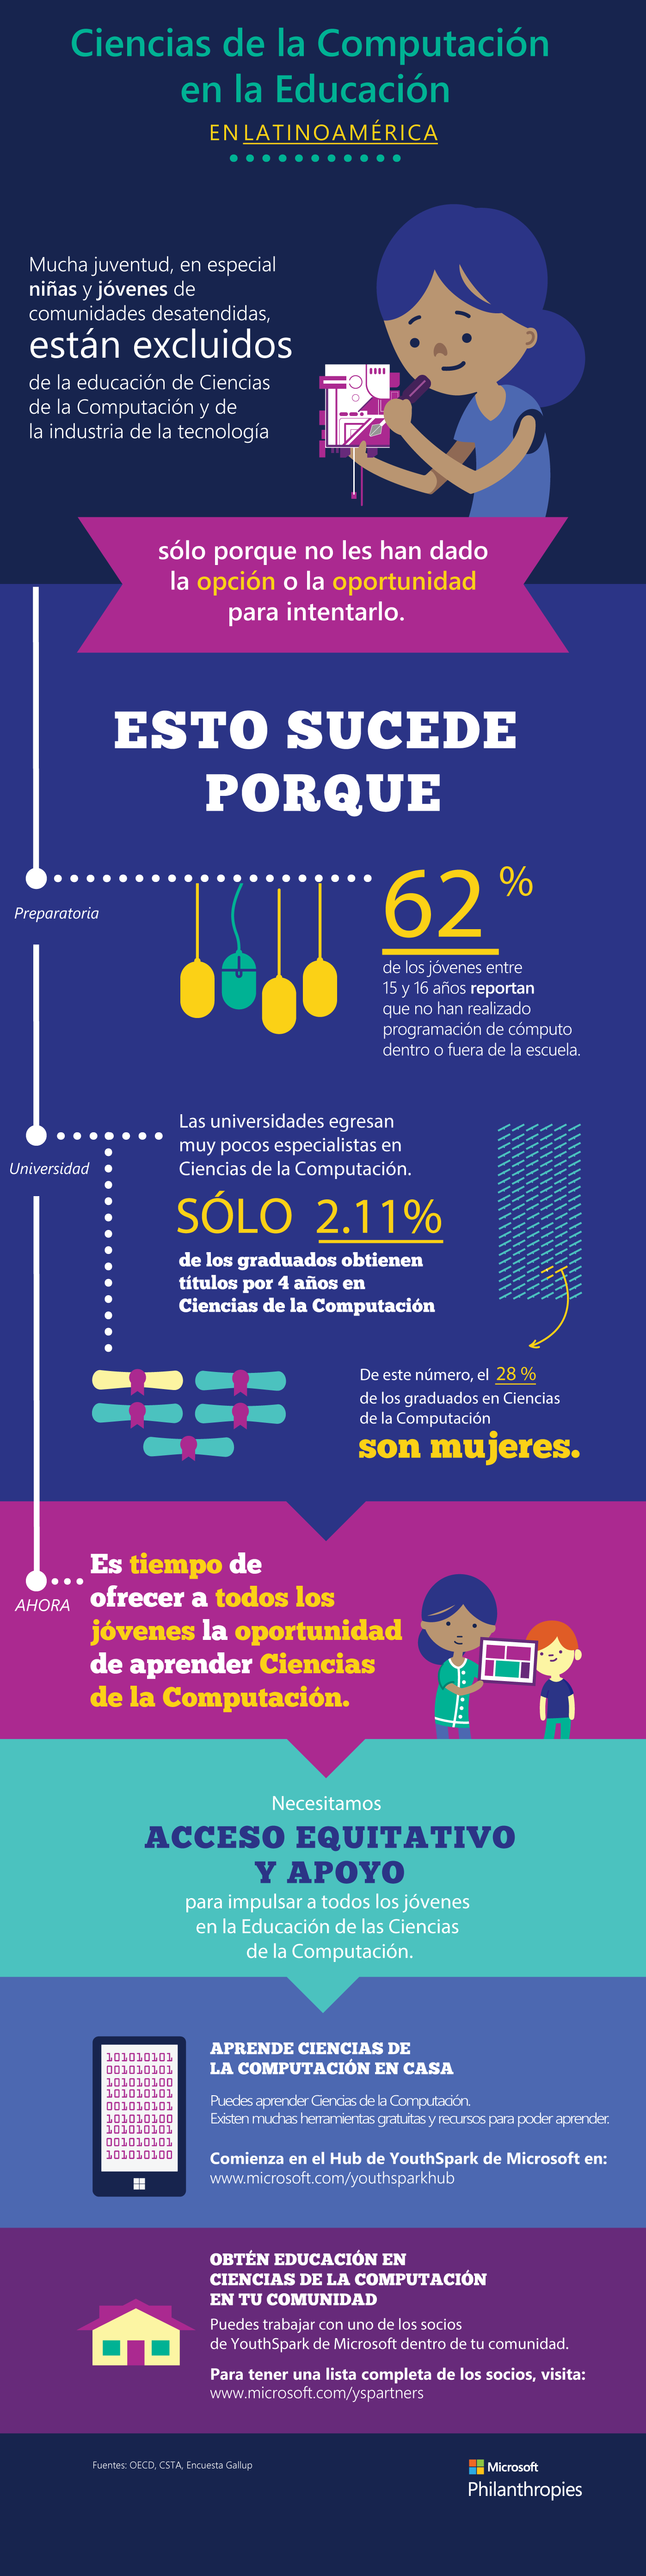 Infografia - Ciencias de la Computacion en la Educacion en Latinoamerica